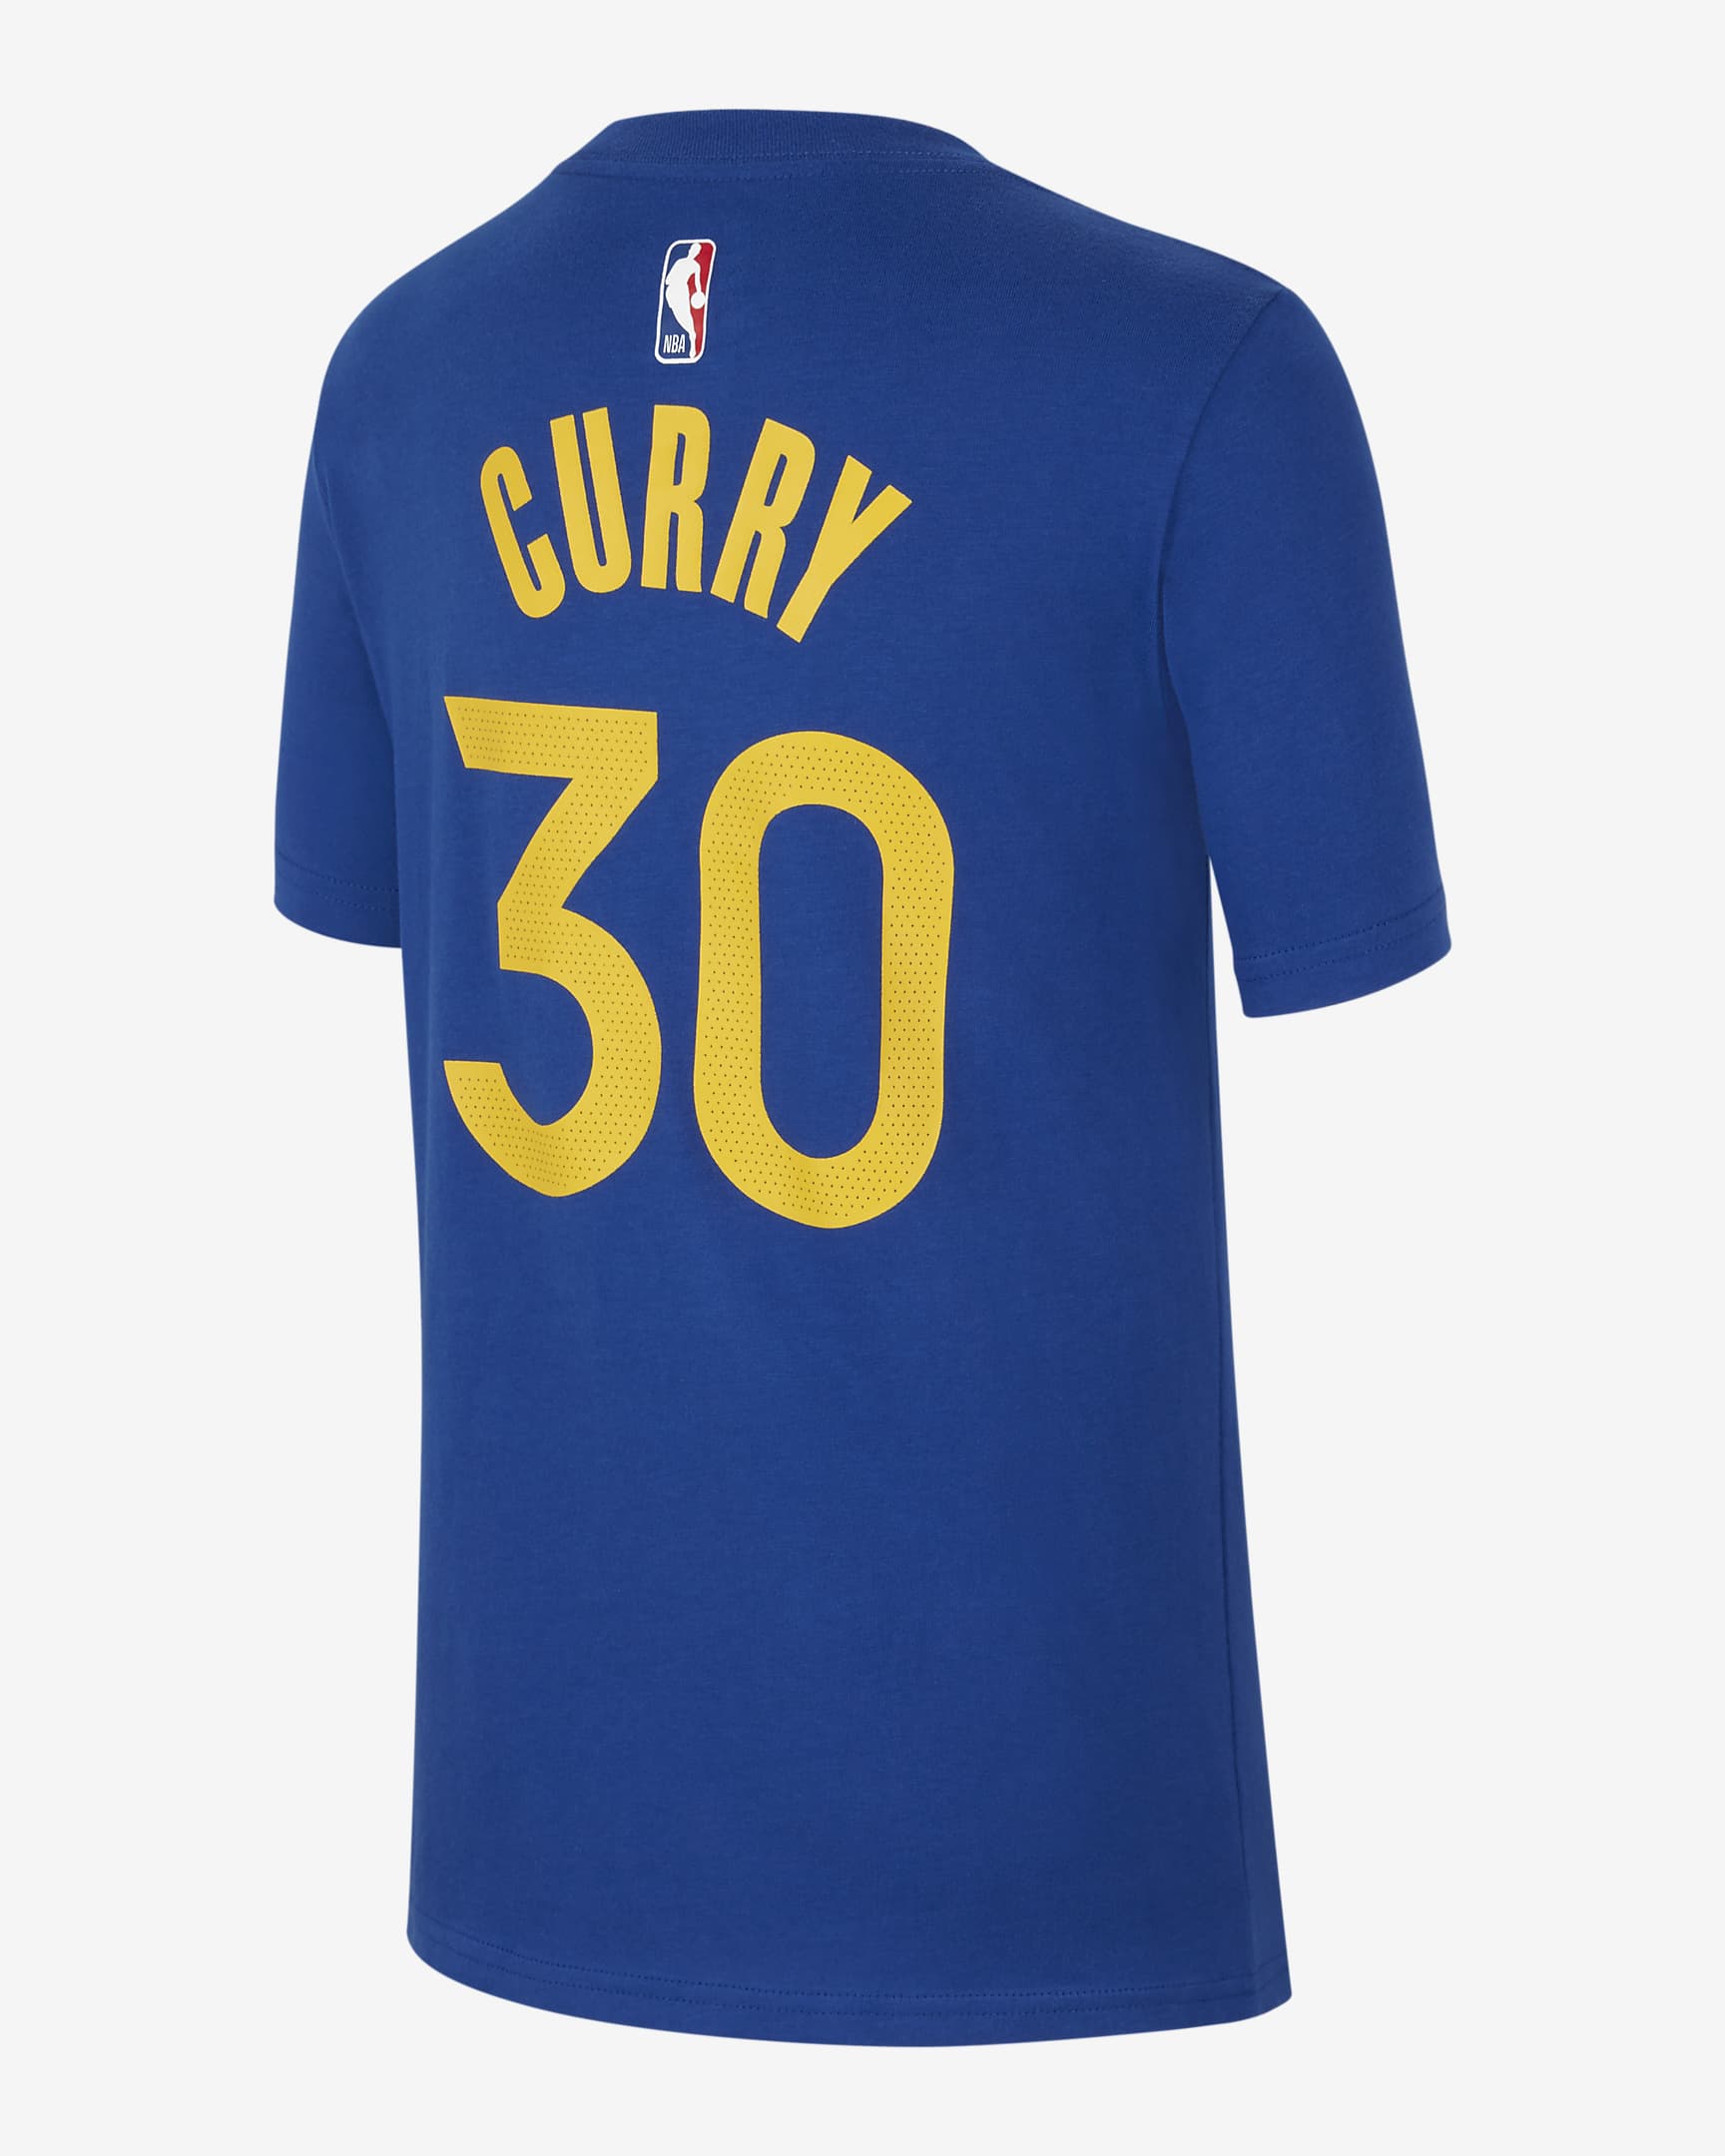 Golden State Warriors Older Kids' Nike NBA T-Shirt. Nike SI